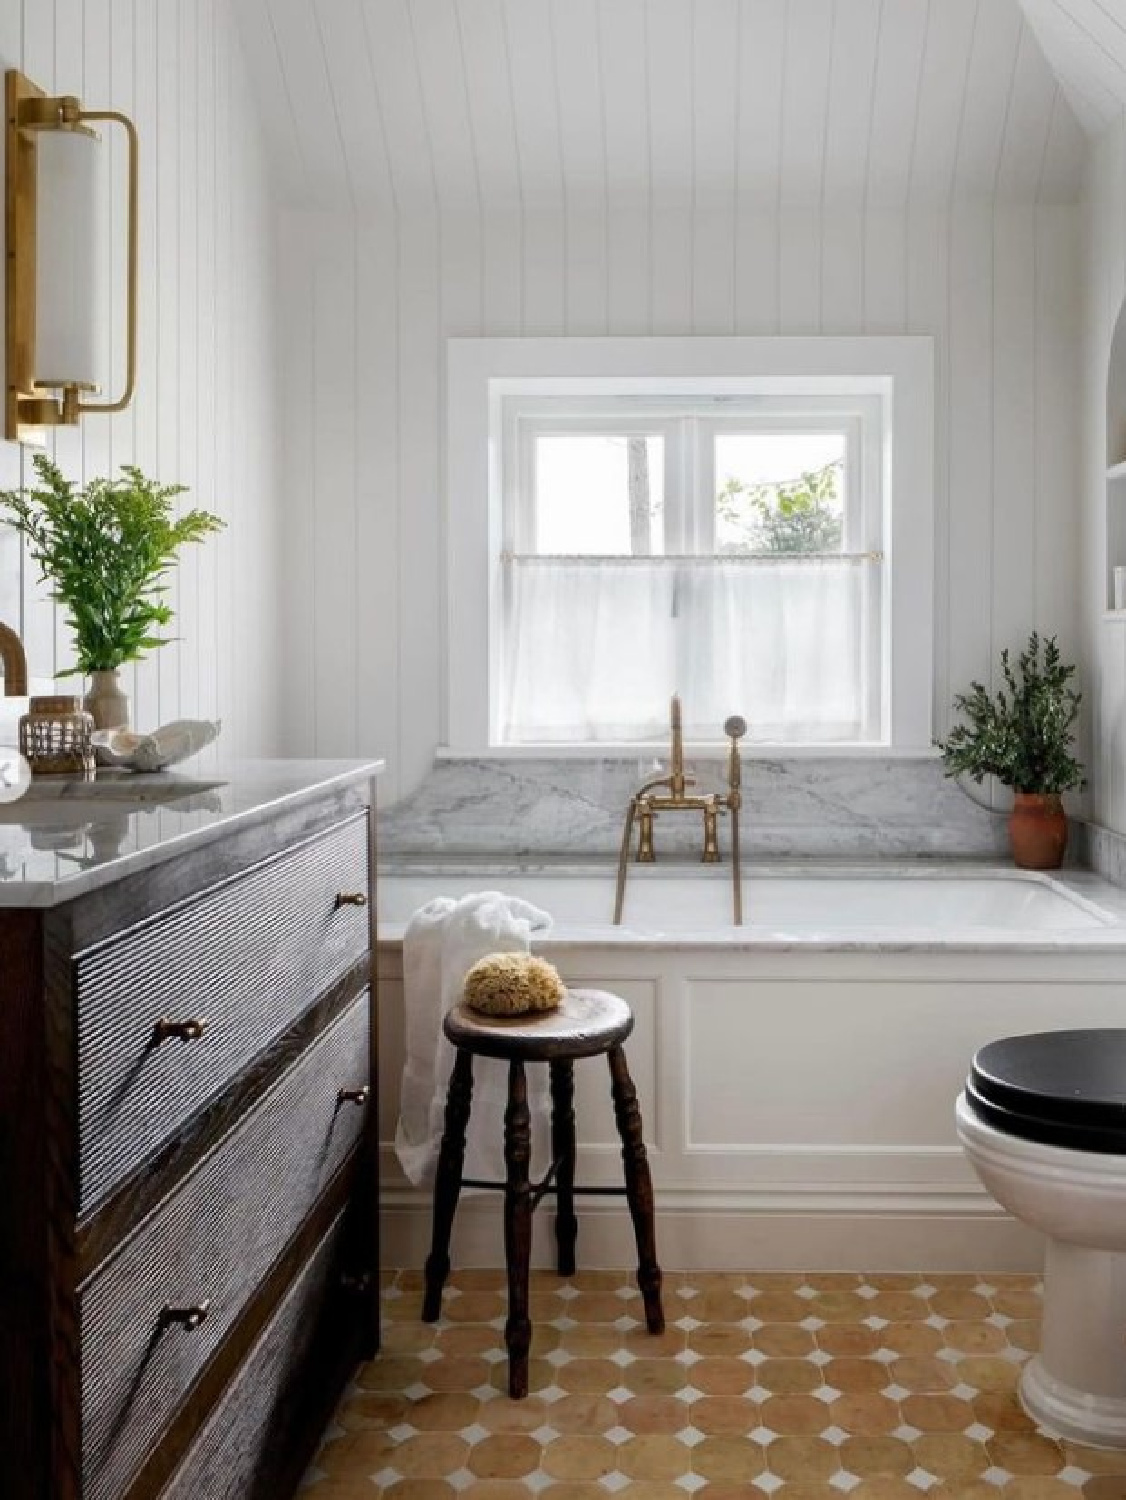 @houseninedesign - vintage modern bath with bespoke design and earthy warmth. #timelessbathrooms #vintagemodern